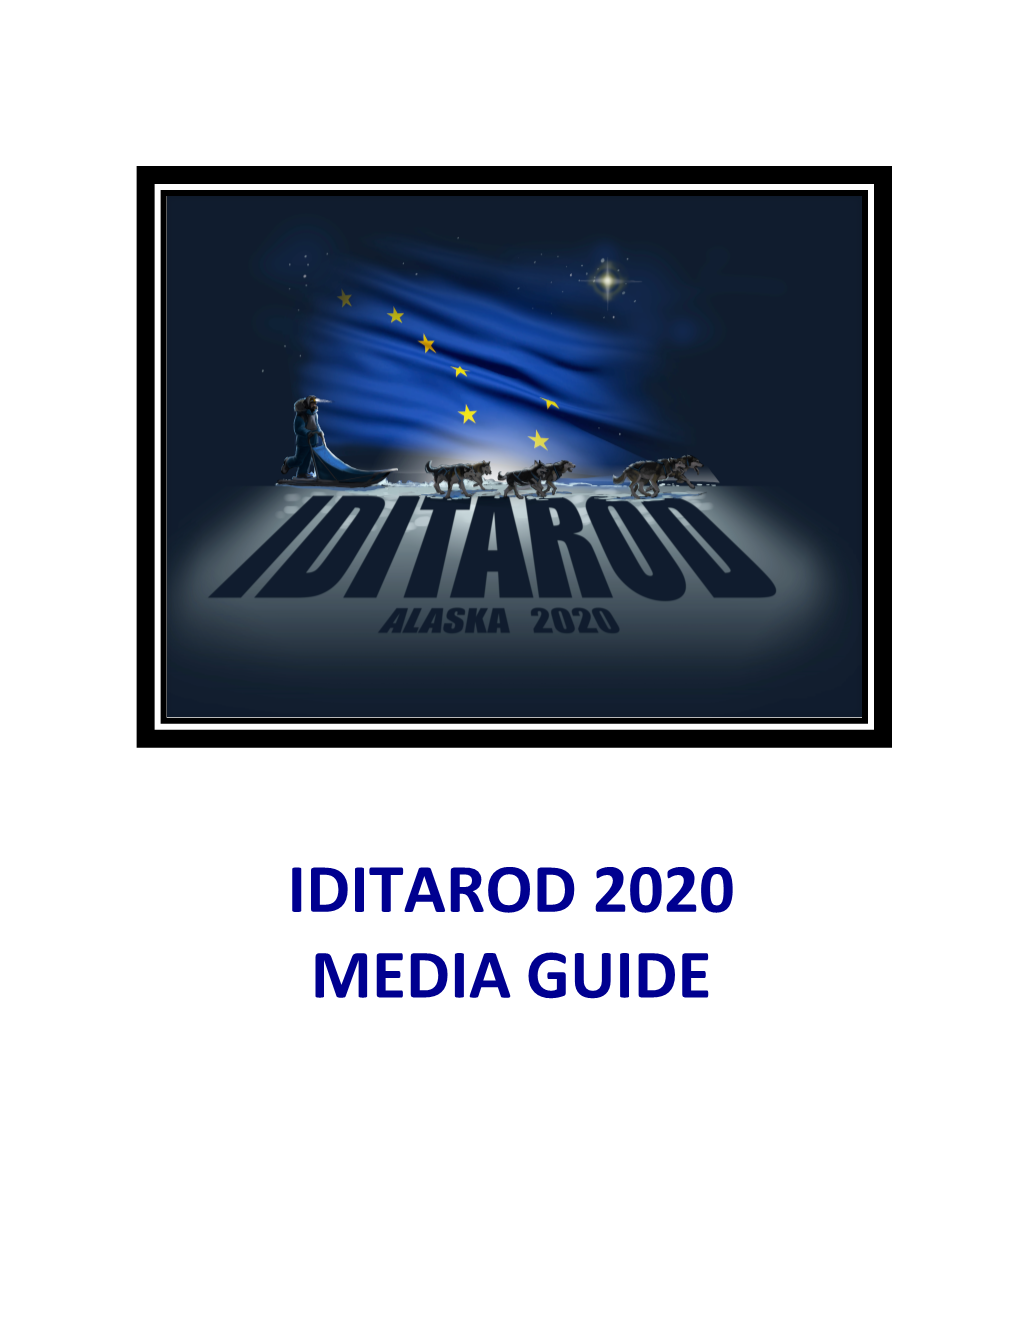 Iditarod 2020 Media Guide